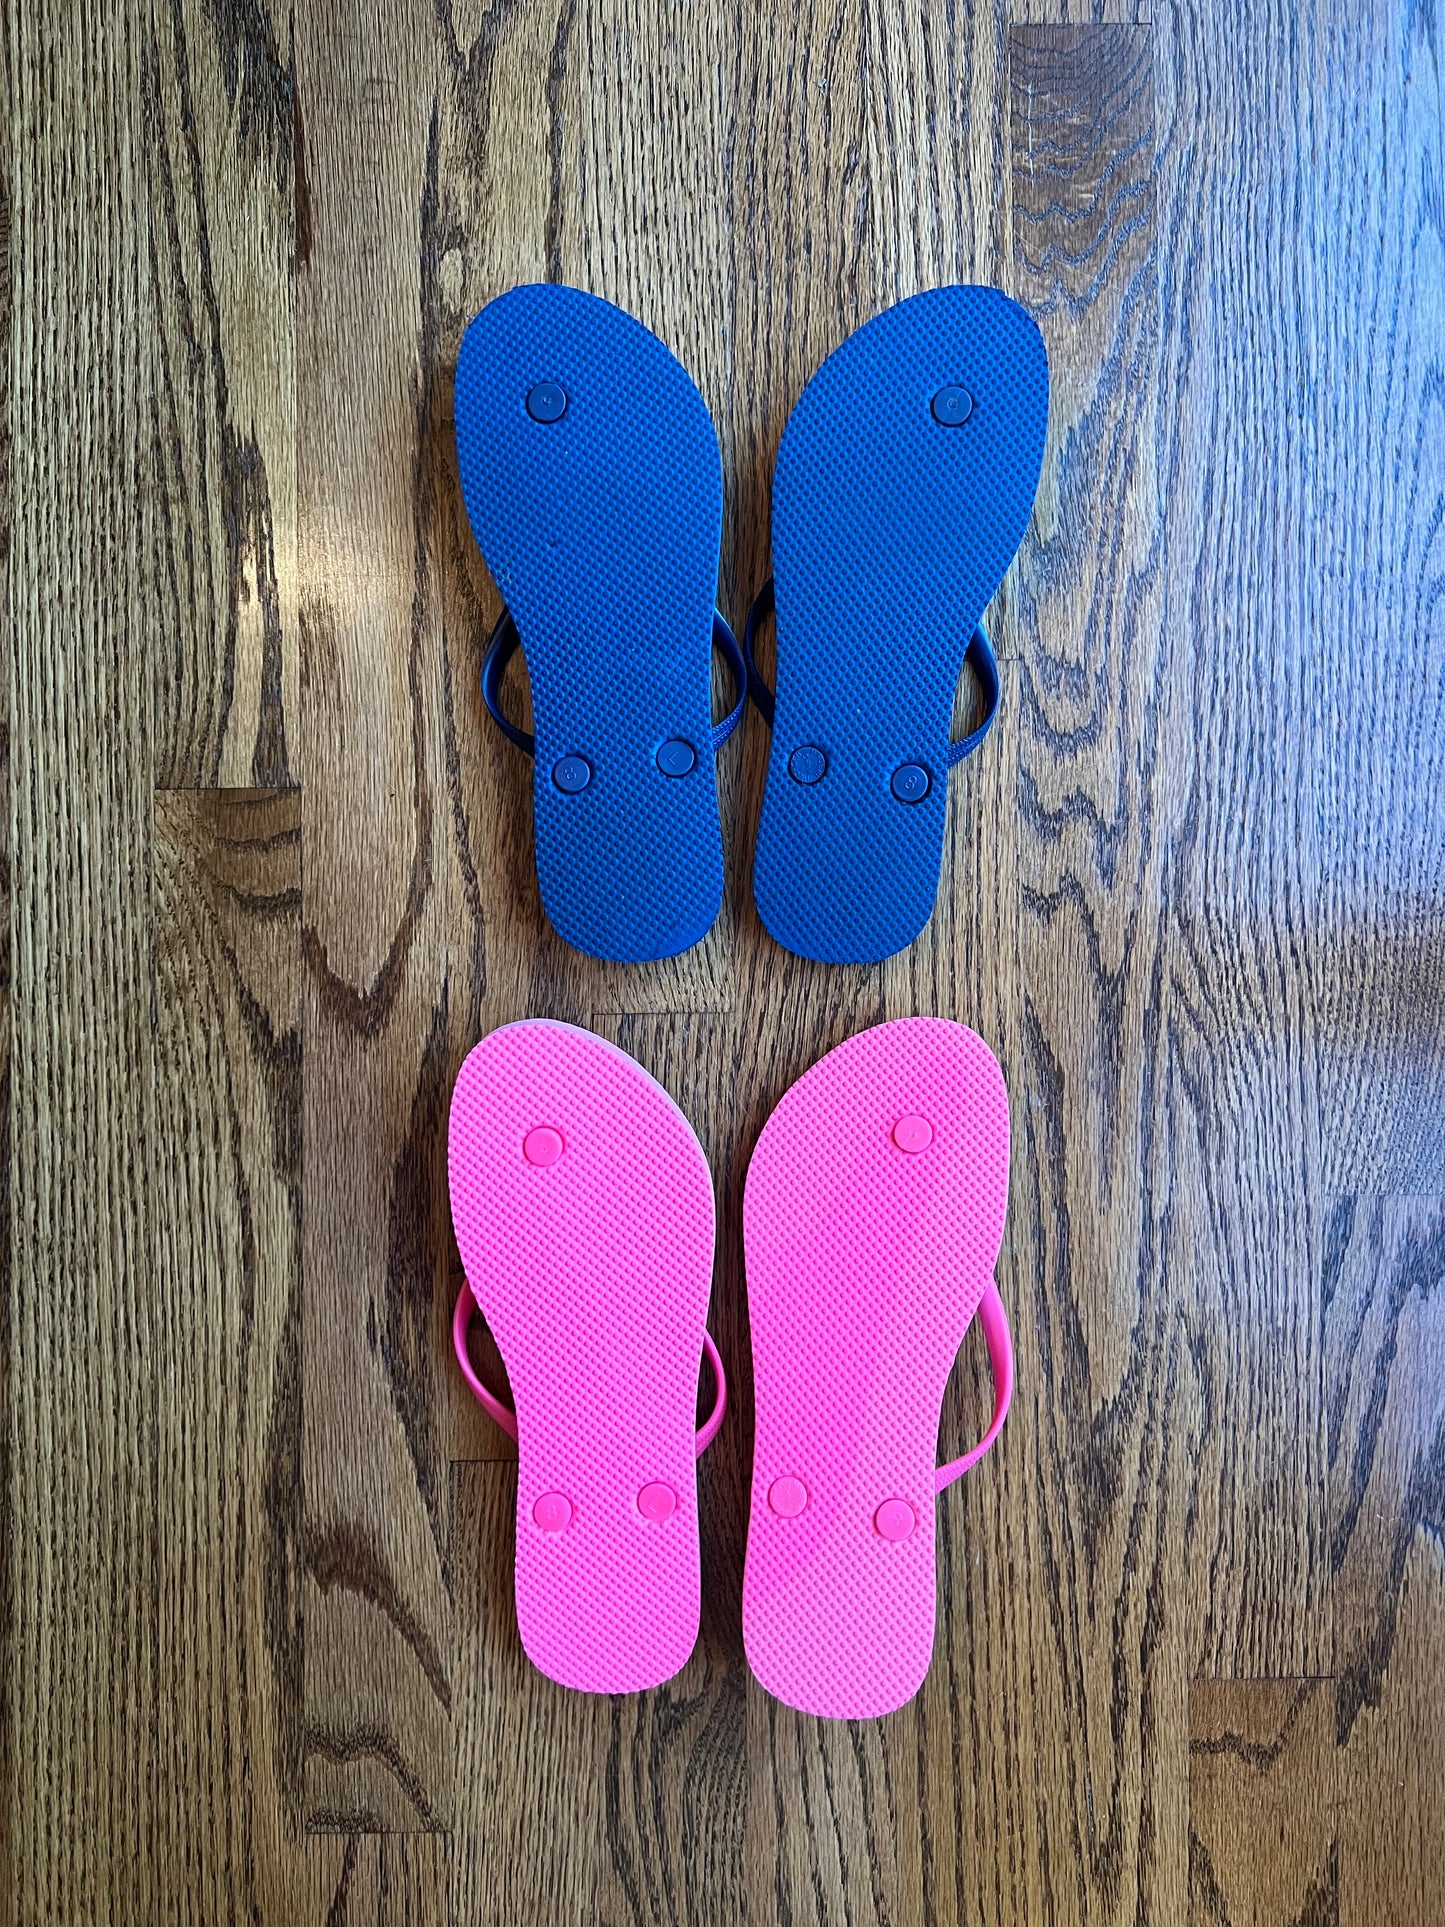 Old Navy Women's Size 8 Flip Flops, Set of 2 (Pink & Navy Blue) - Like New, NWOT